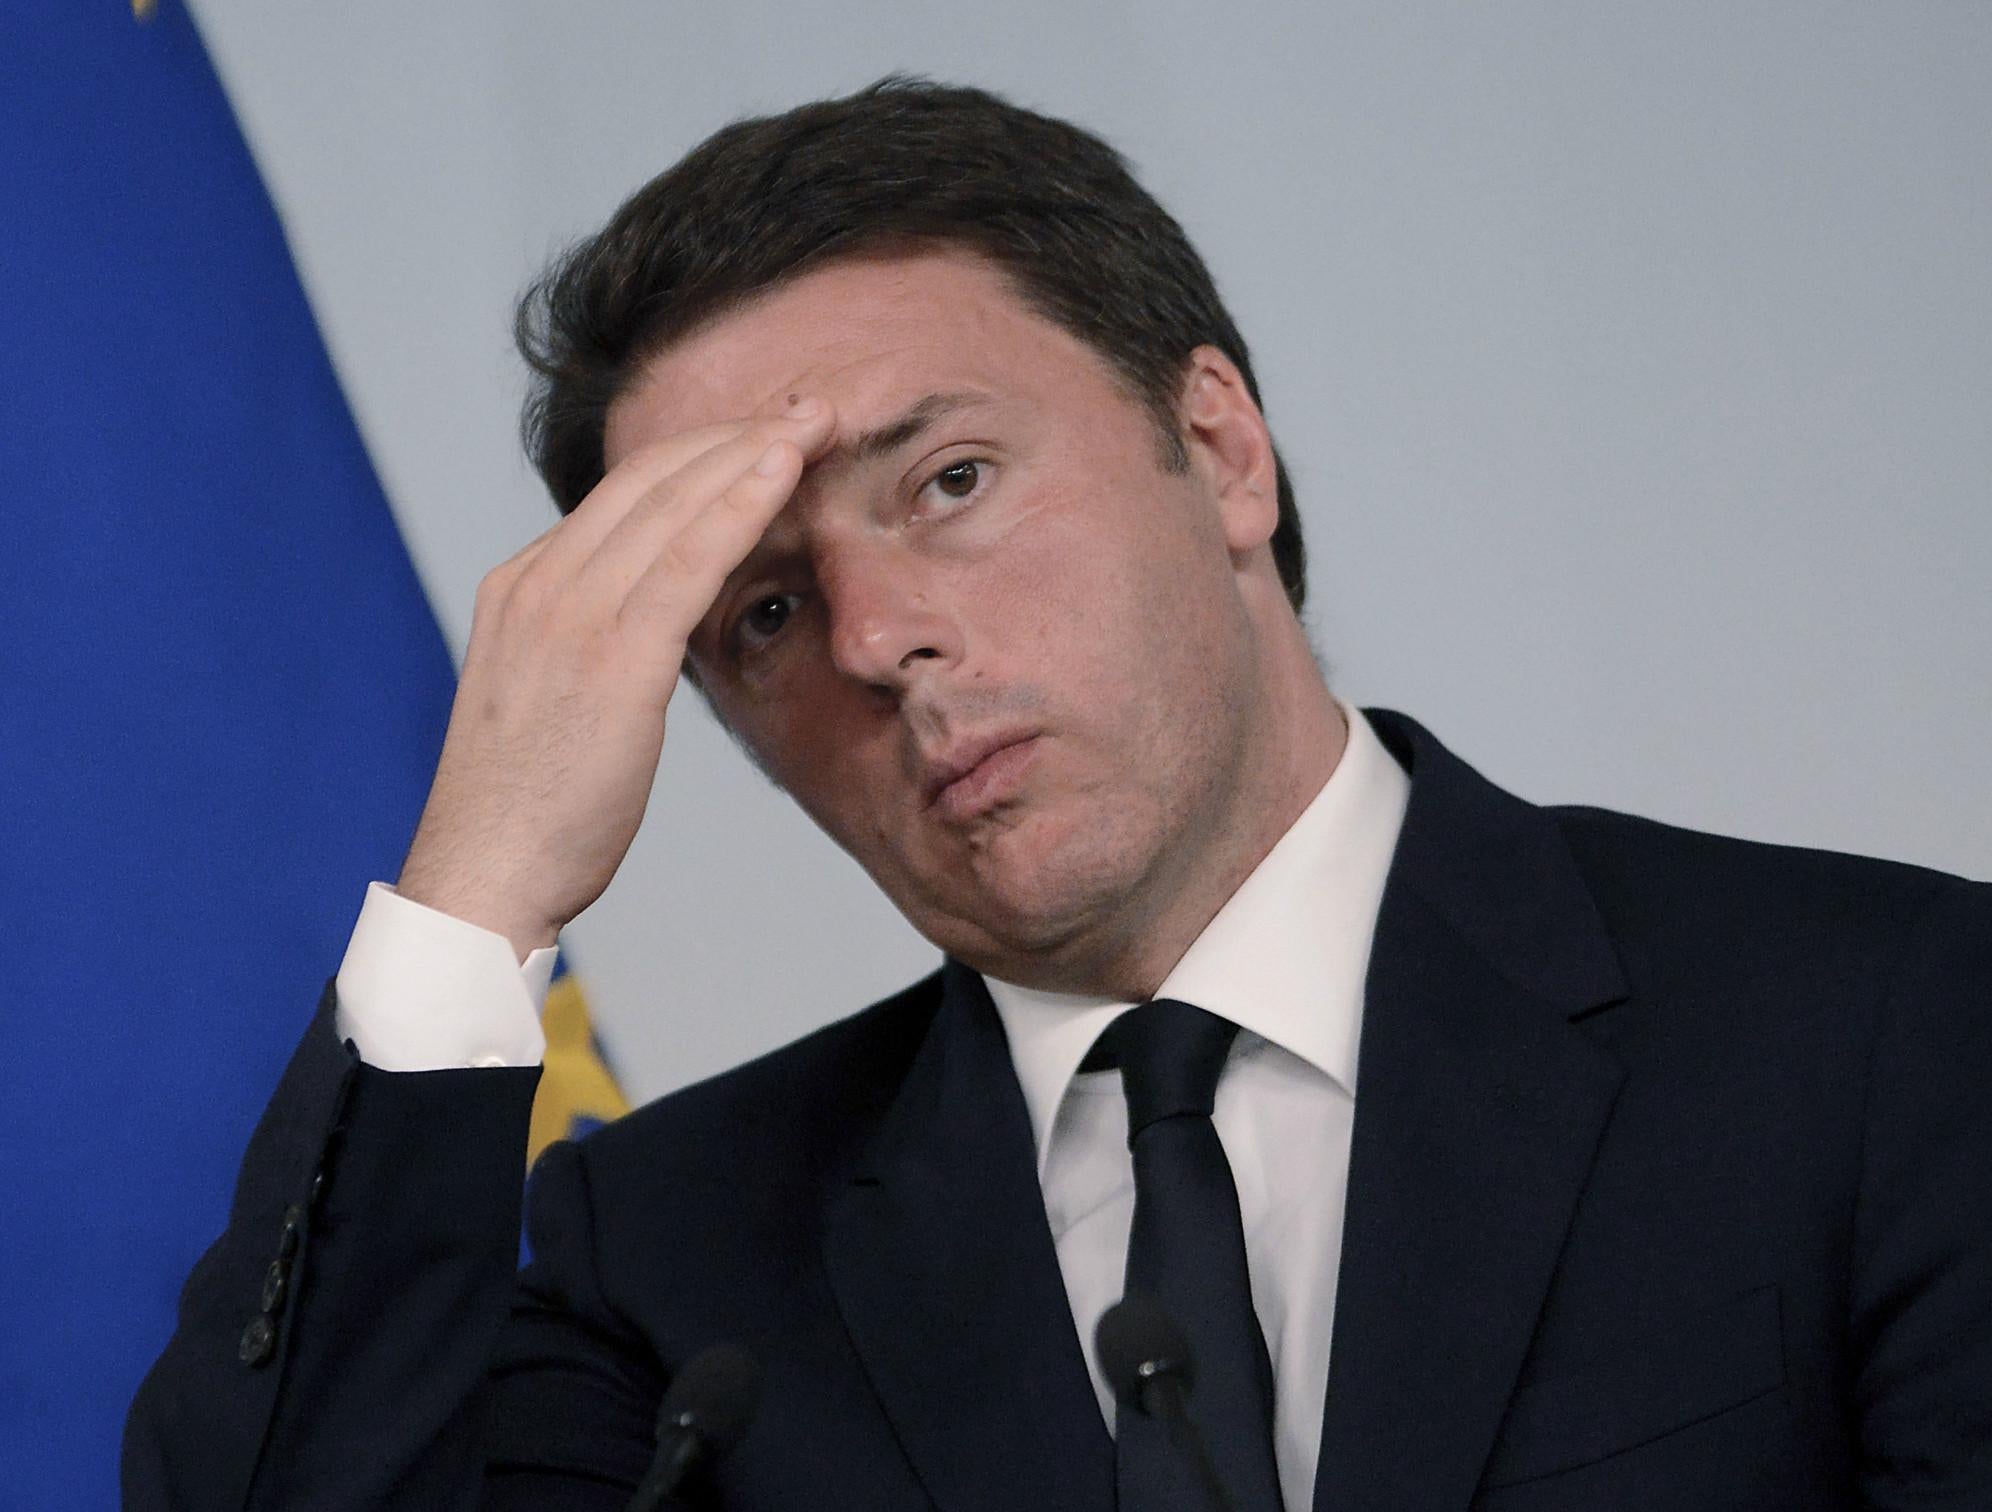 Italian Premier Matteo Renzi June 15, 2016 in Rome, Italy.